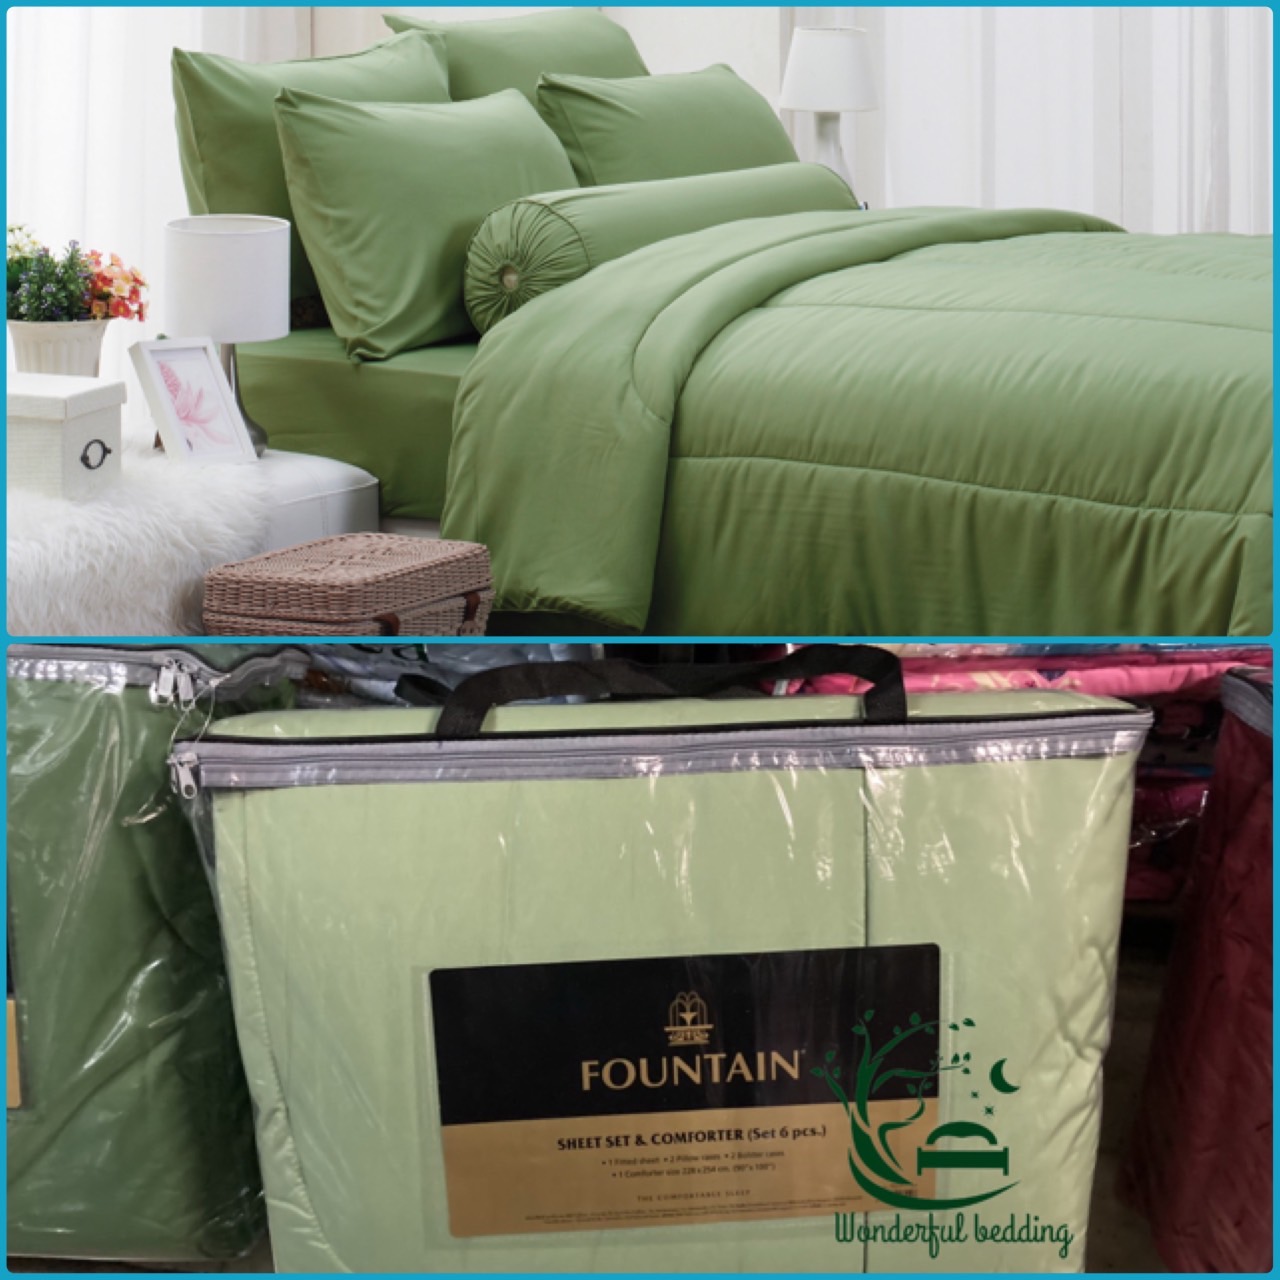 FOUNTAIN ชุดผ้าปู (ไม่มีผ้านวม) ผ้าปู ที่นอน แท้ 100% FTC สีพื้น เขียว Green Gray เทา ขนาด 3.5 5 6ฟุต ชุดเครื่องนอน ผ้านวม ผ้าปูที่นอน wonderful bedding  variation3 Green2ขนาดสินค้า 6 ฟุต